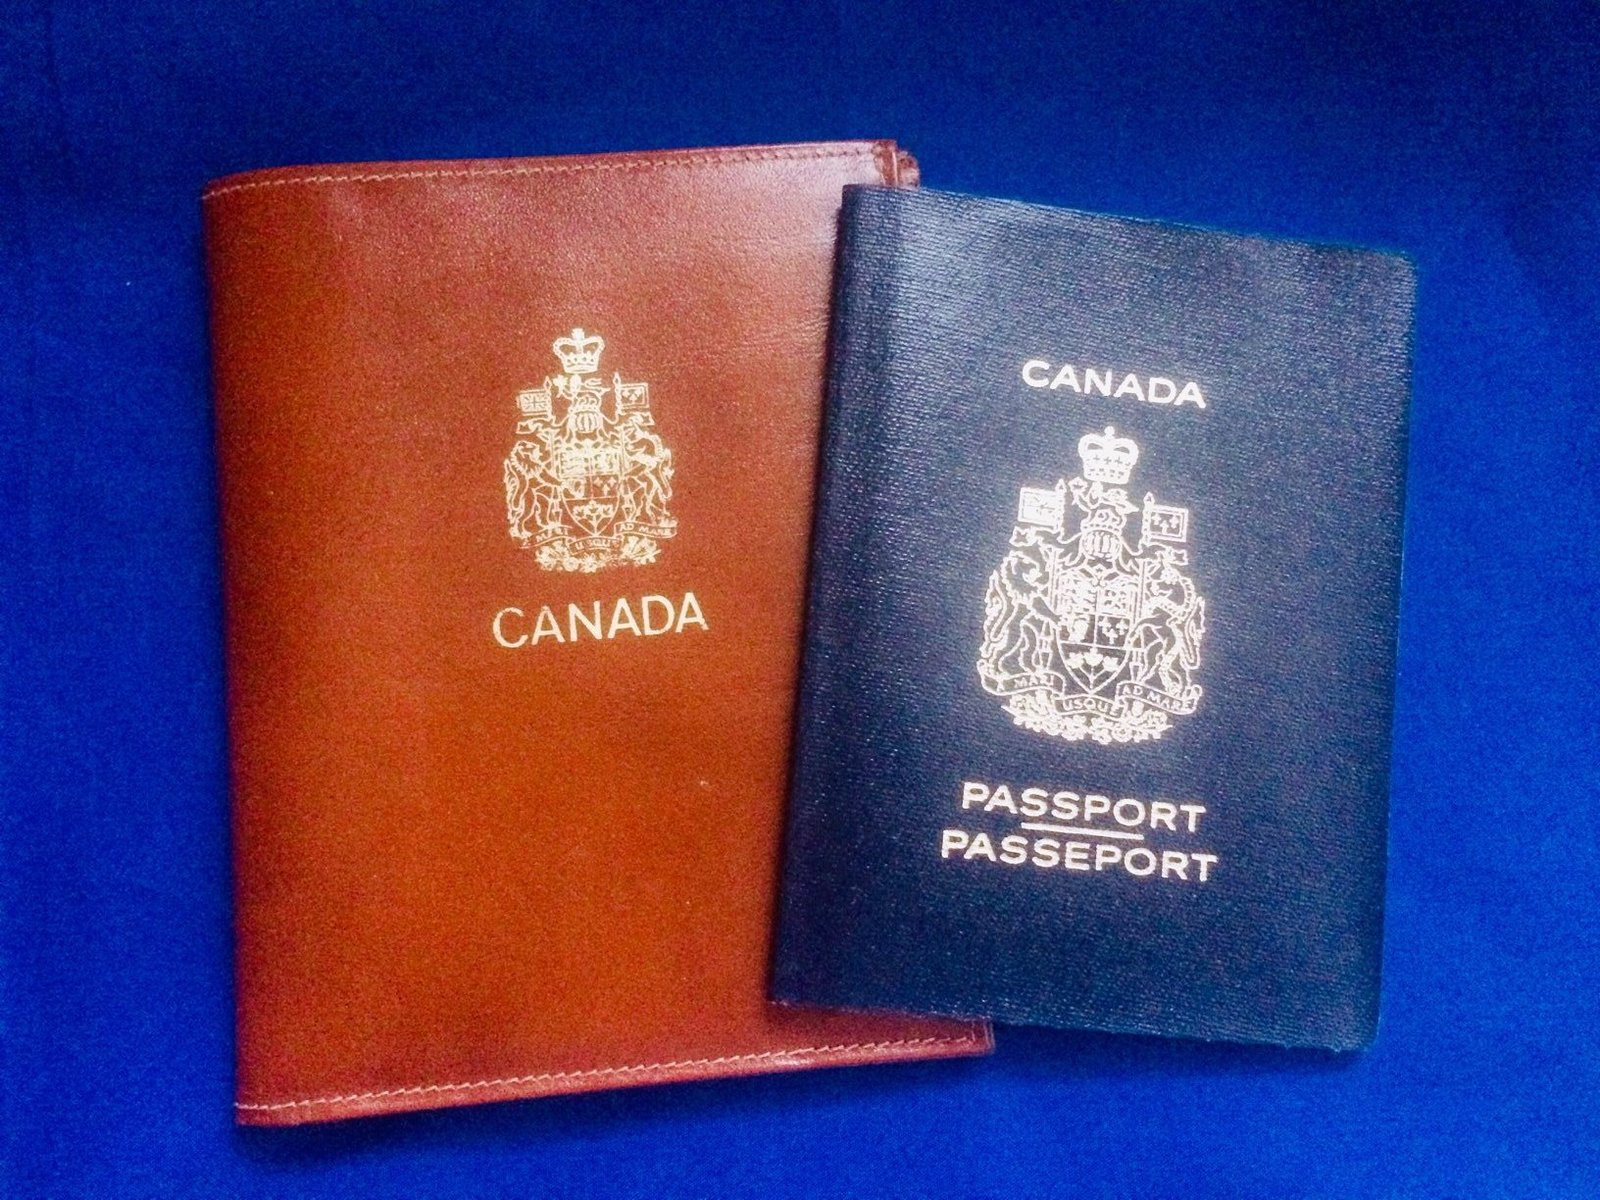 print passport photo in picasa 3.9